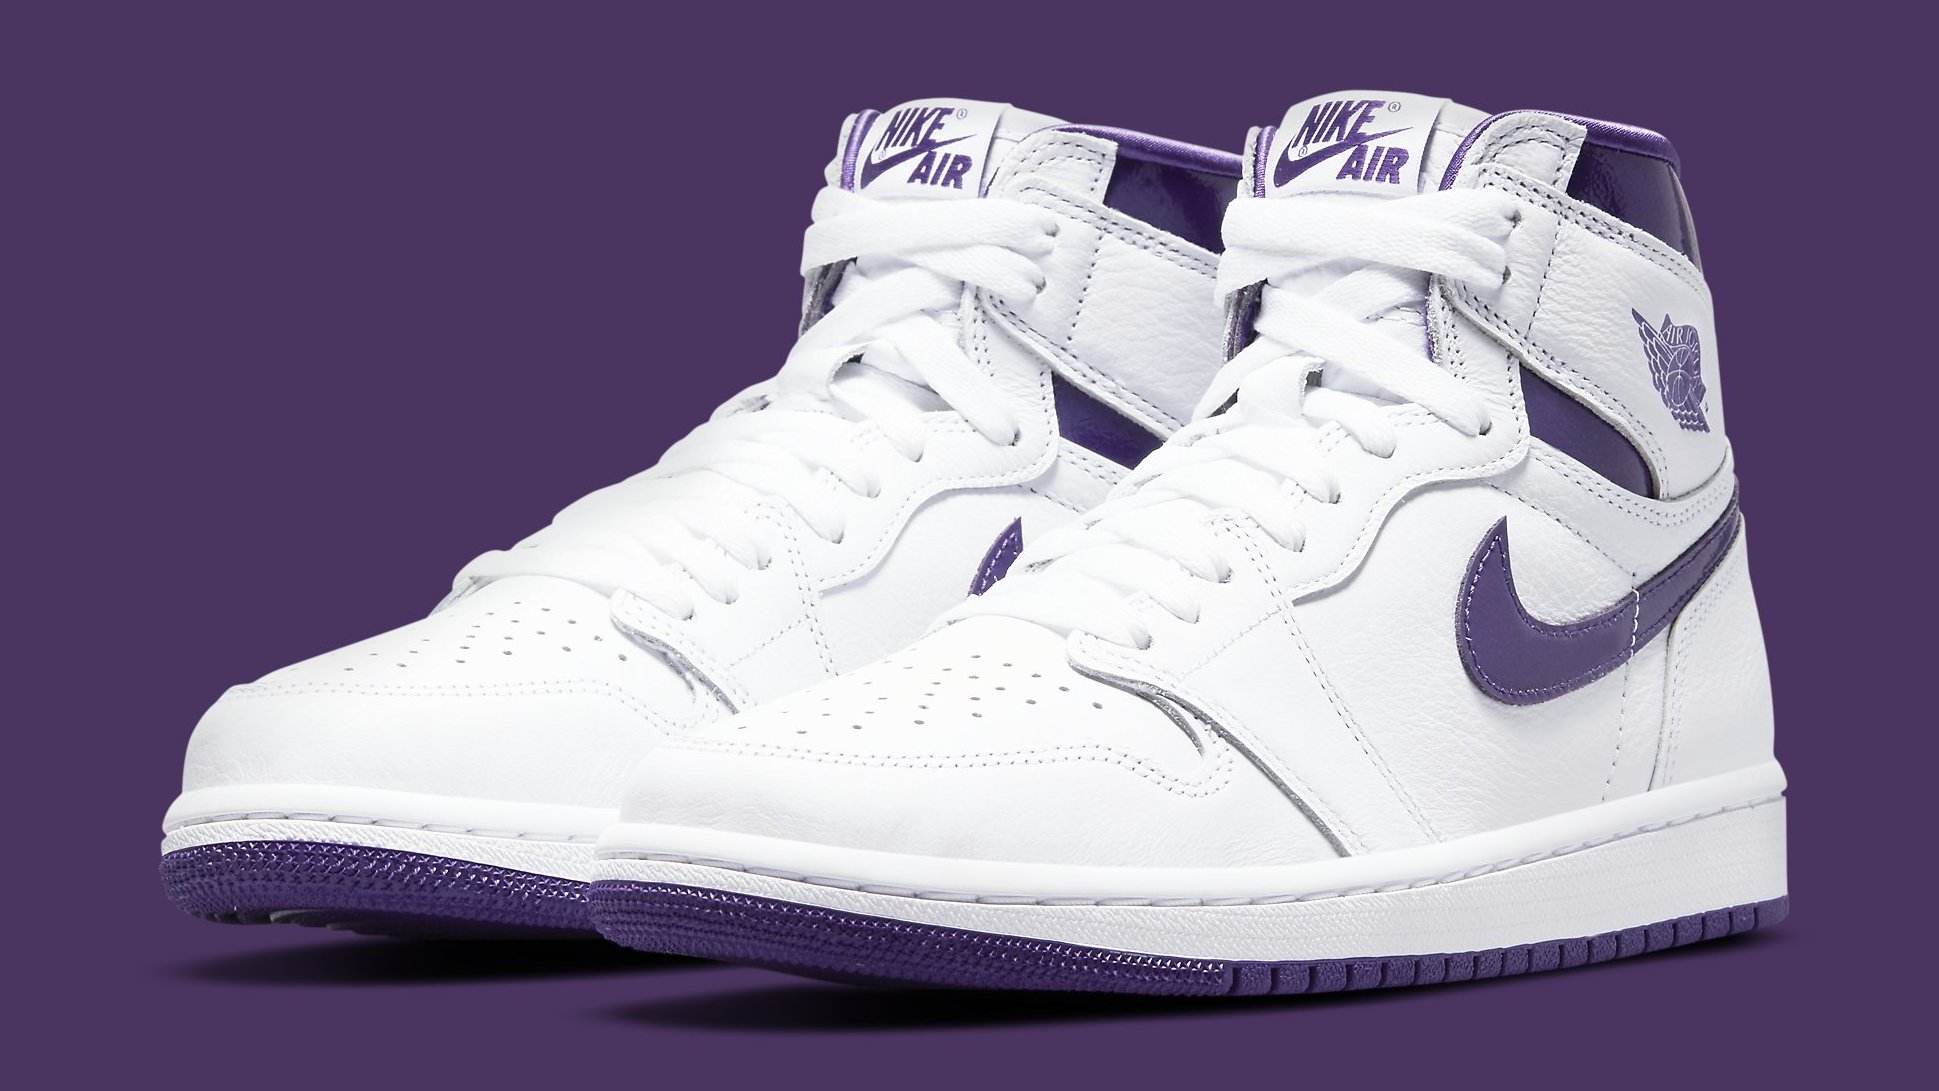 Air Jordan 1 “Court Purple” Women's Shoe